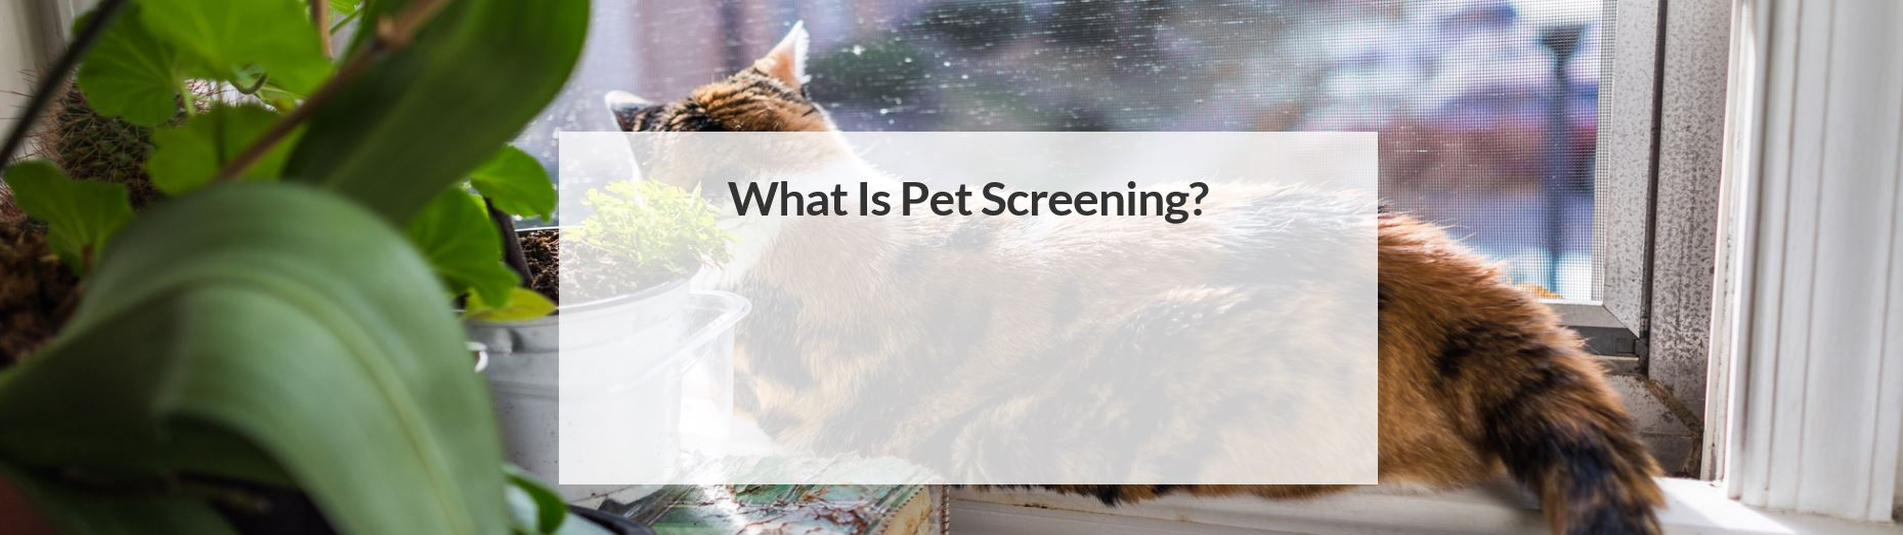 Phifer Pet Screening products. Pet Screen for patios, doors and windows.